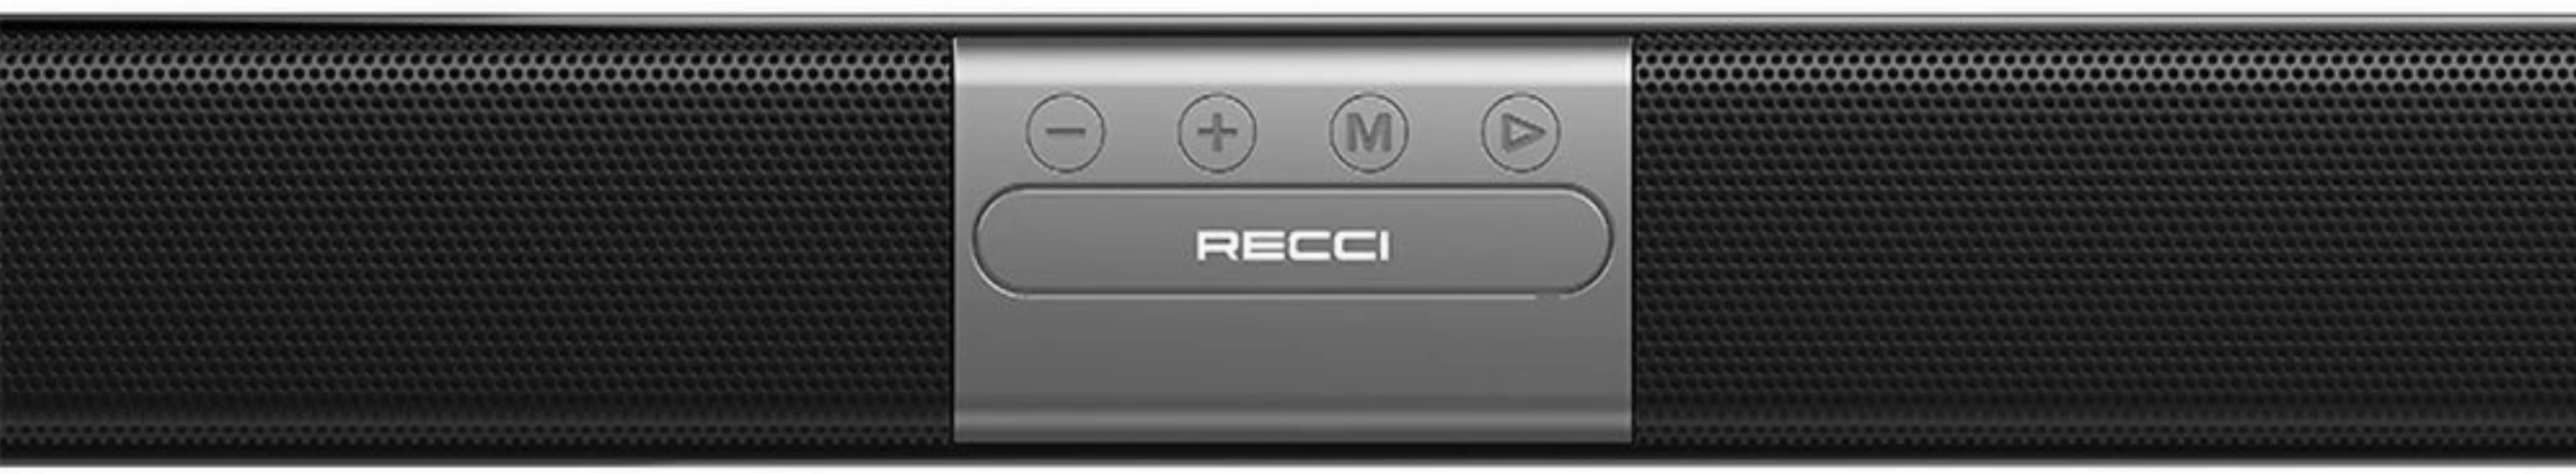 Recci RSK-W32 Bach Serisi Hi-Fi Akıllı Wireless Bluetooth 5.3 Speaker Hoparlör 10W 1500mAh - Siyah